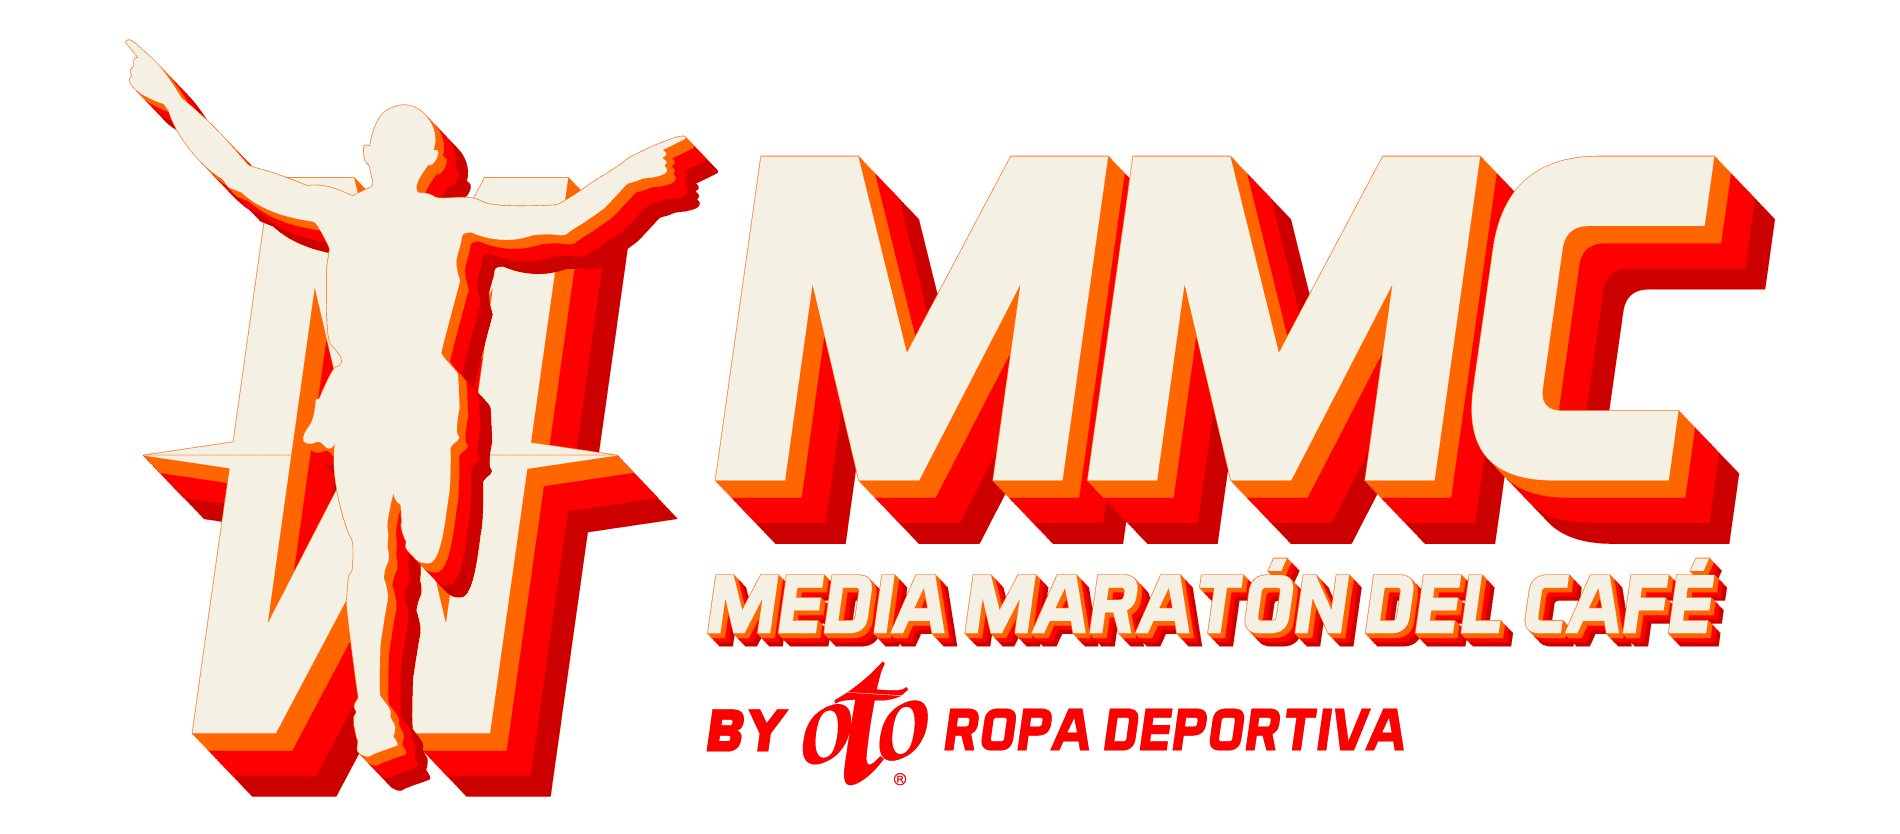 Media Maratón del Café